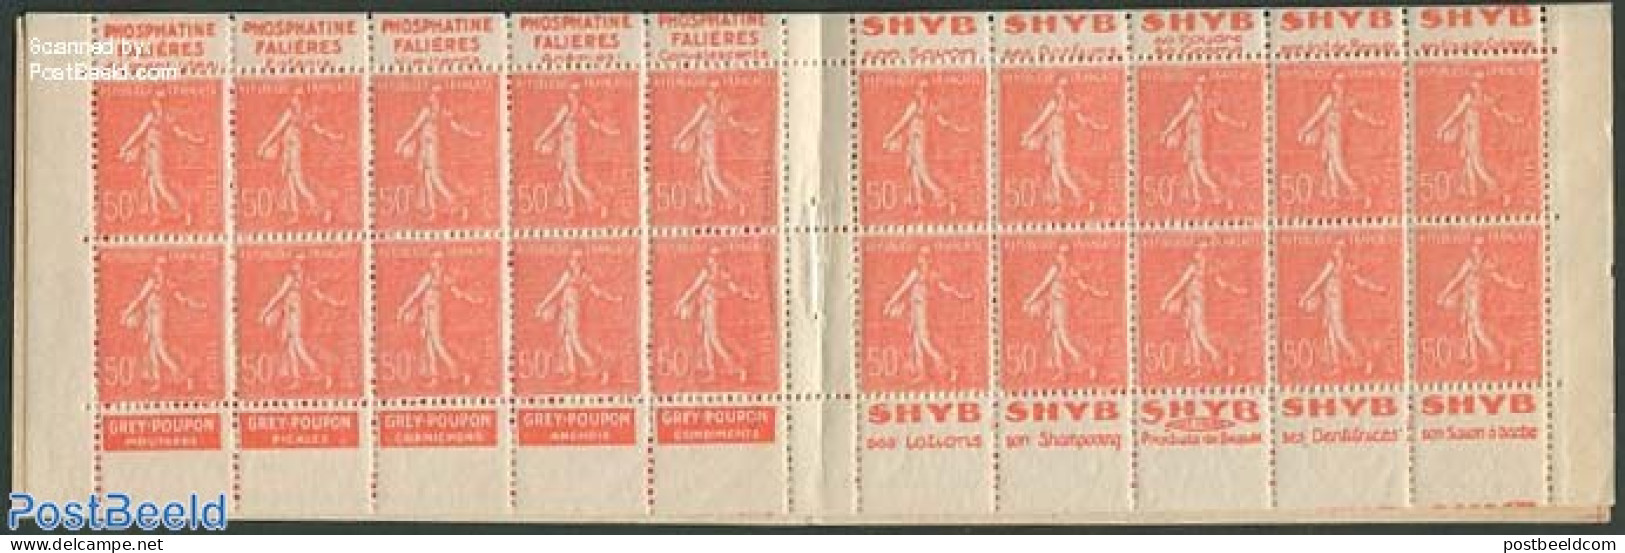 France 1924 20x50c Booklet (Falieres-Shyb-Grey Poupon-Shyb), Mint NH, Stamp Booklets - Neufs